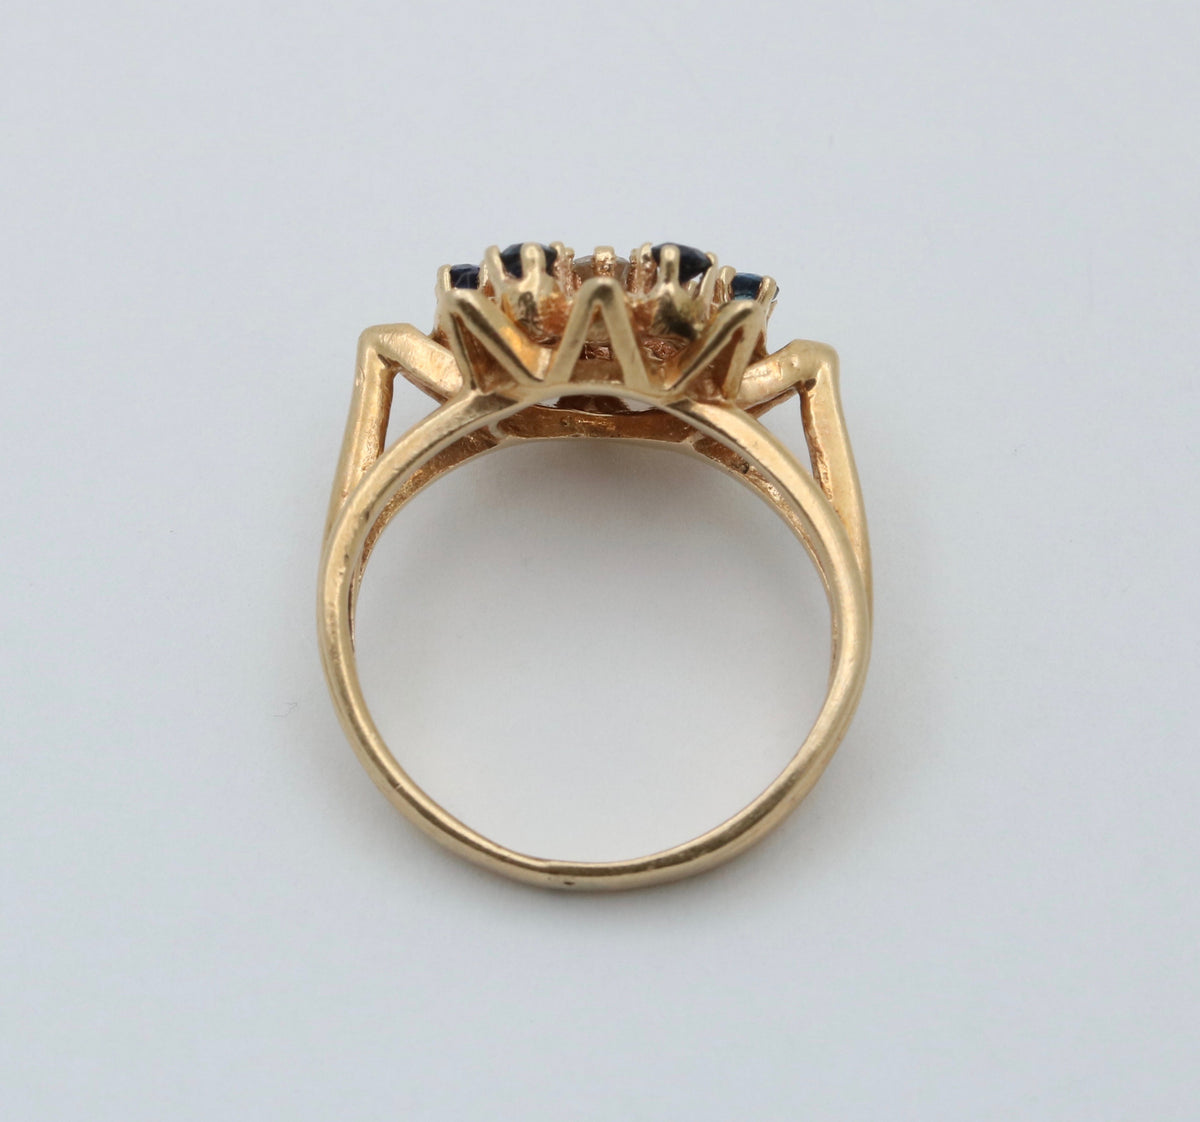 Sapphire and Diamond Snowflake Ring